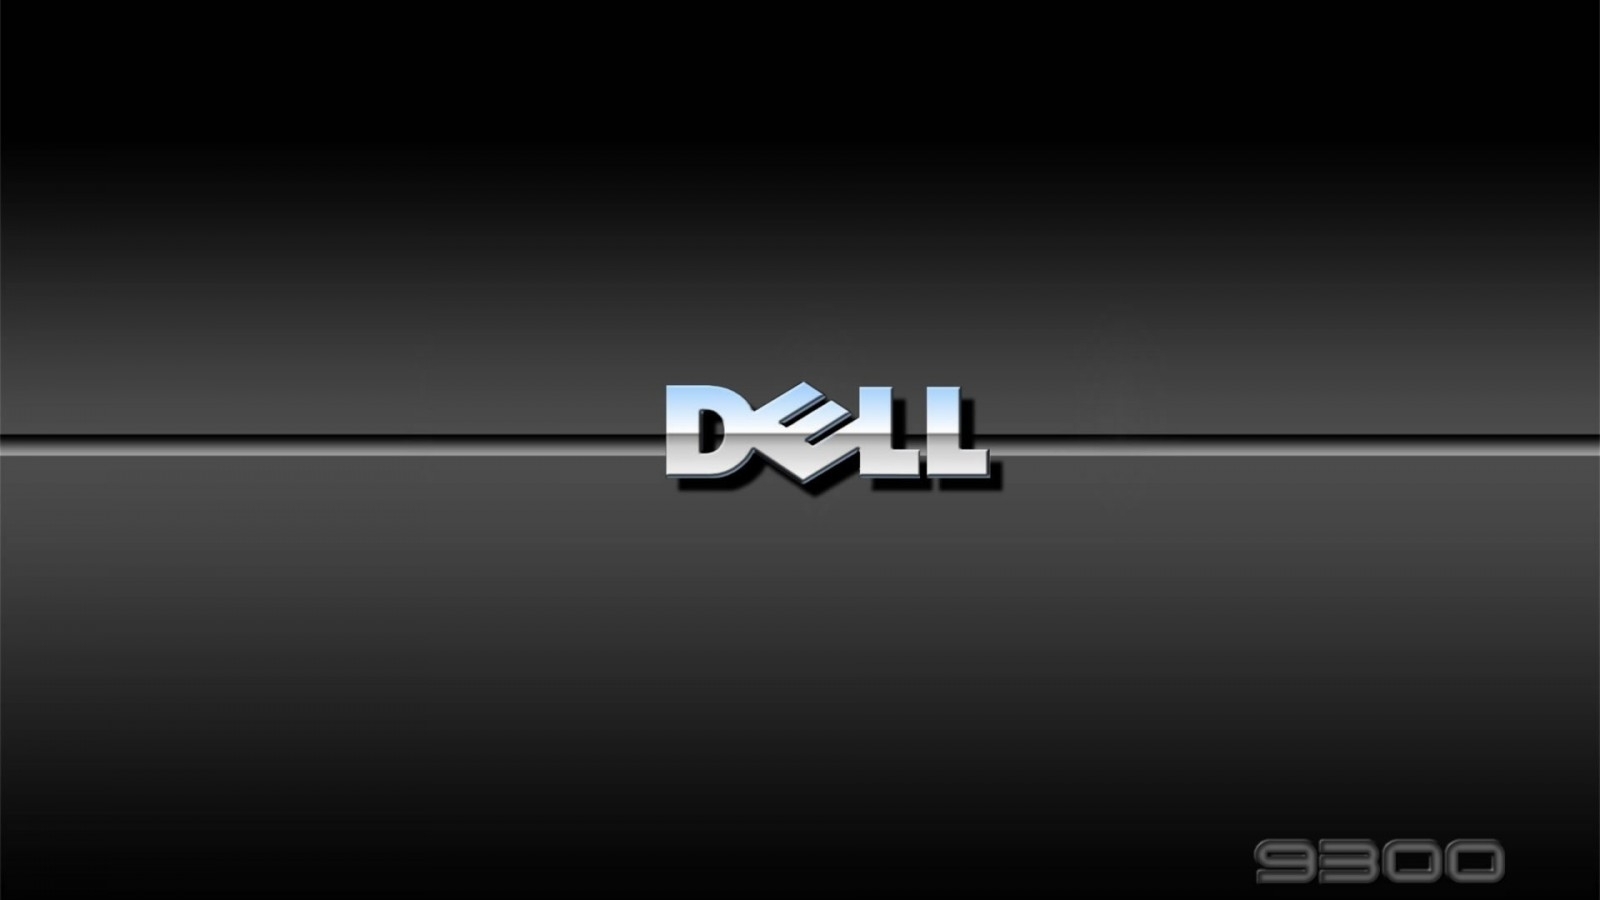 10 Best Dell Windows 7 Wallpaper FULL HD 1080p For PC Background 2020